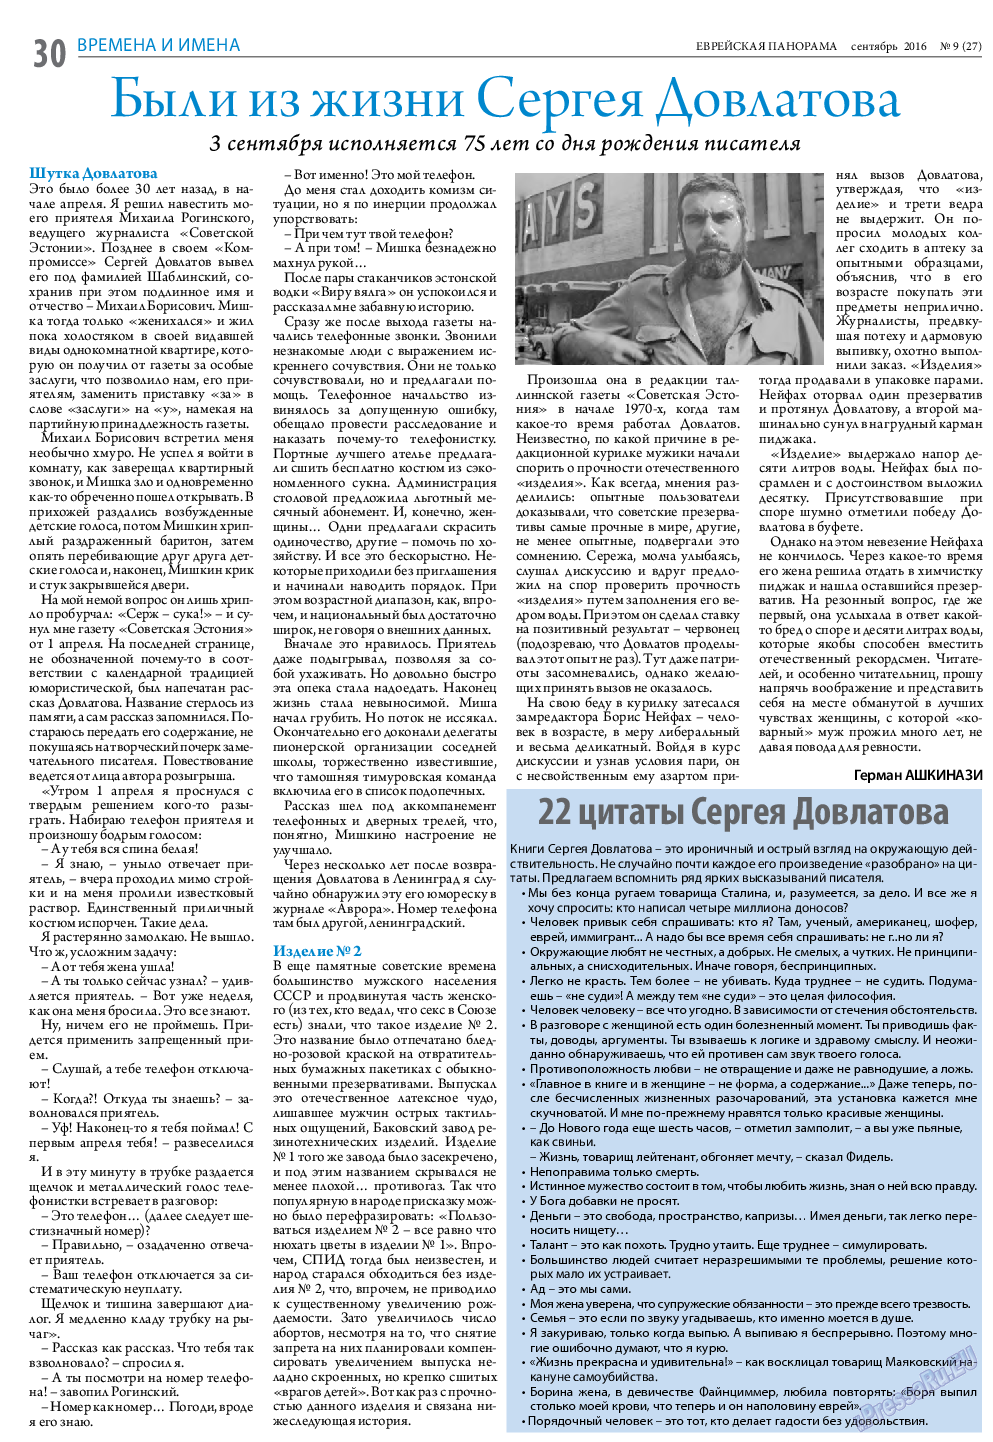 Еврейская панорама, газета. 2016 №9 стр.30